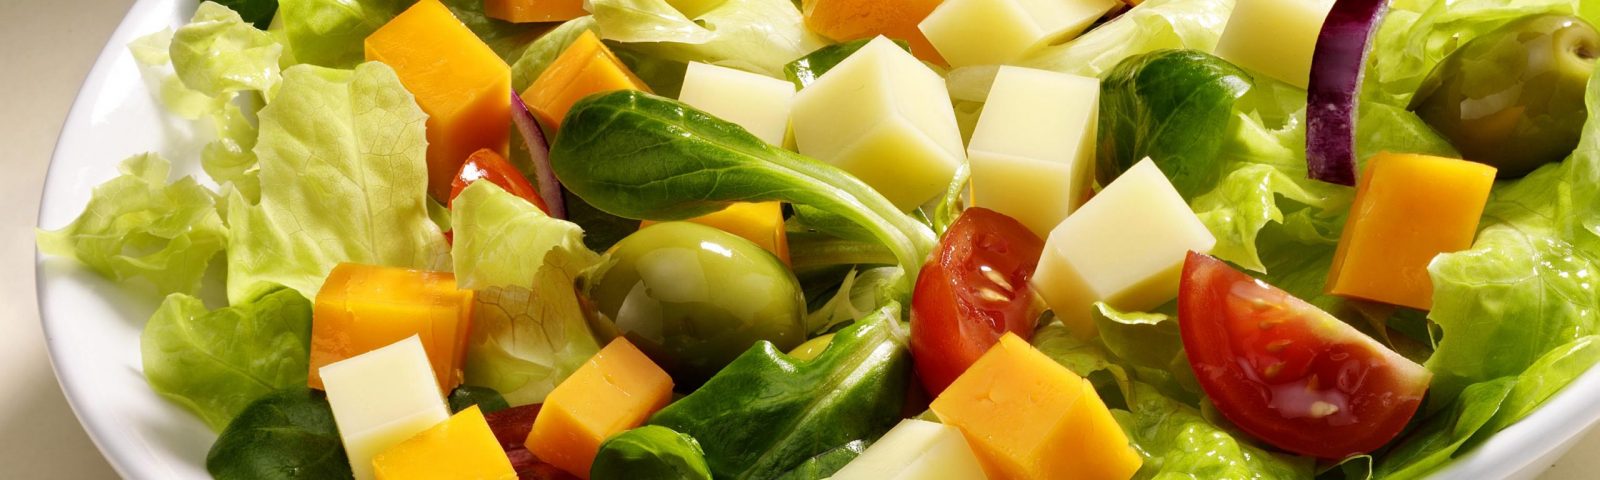 Mozzarella minicubes and salad cheese